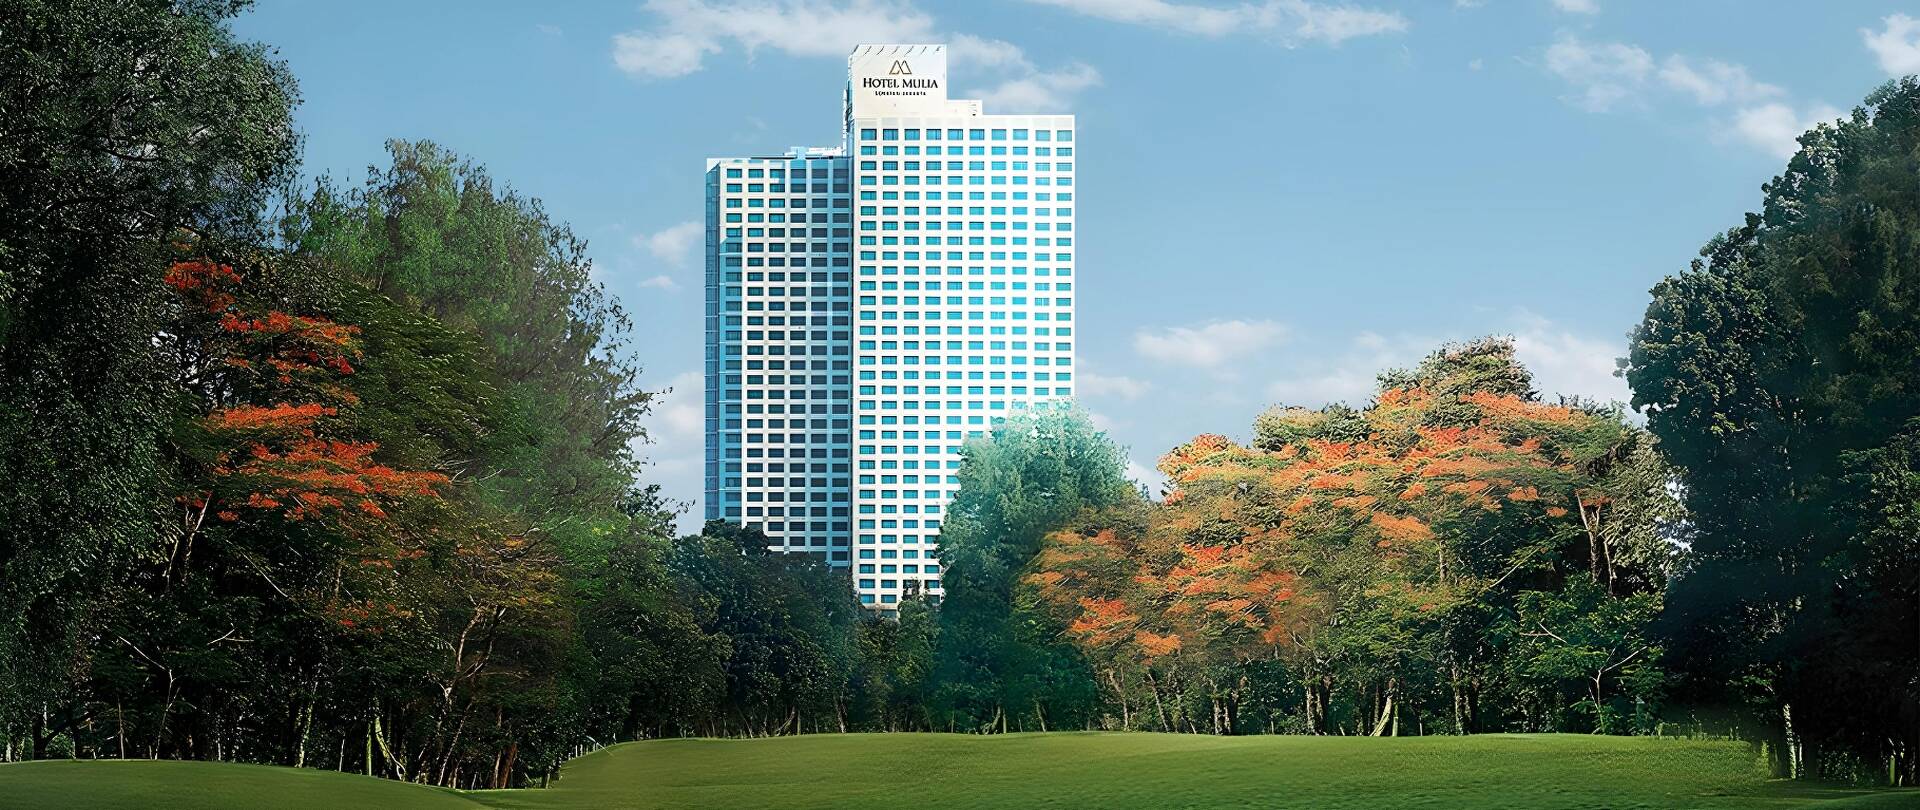 Premier Privileges for Amex Cardholders | Hotel Mulia Senayan, Jakarta